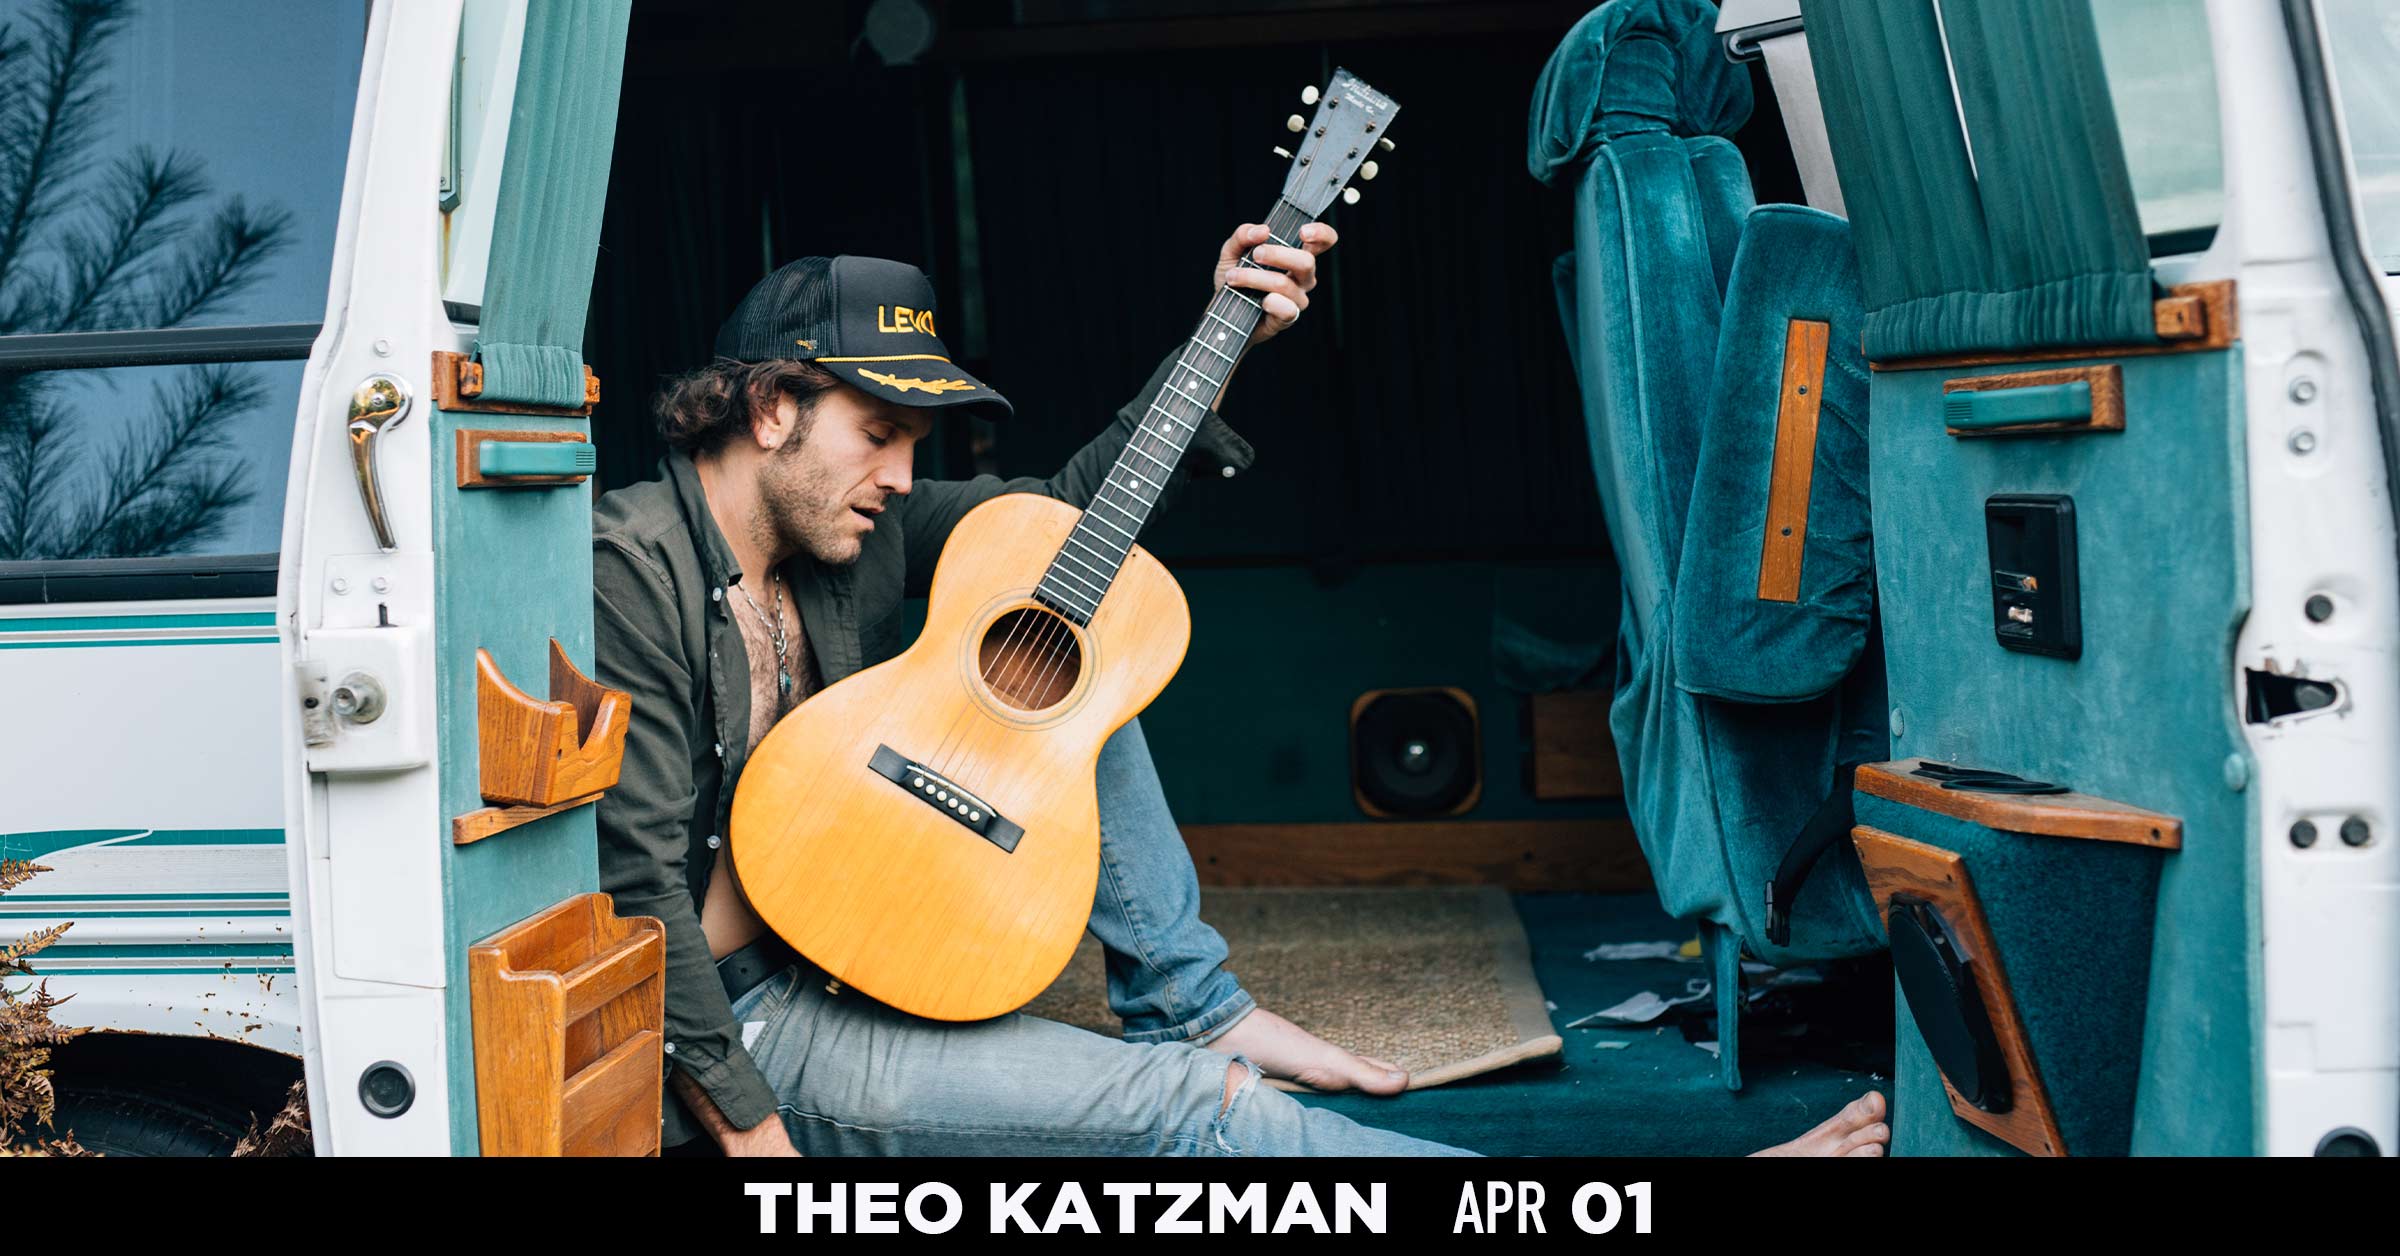 Theo Katzman - Apr 01